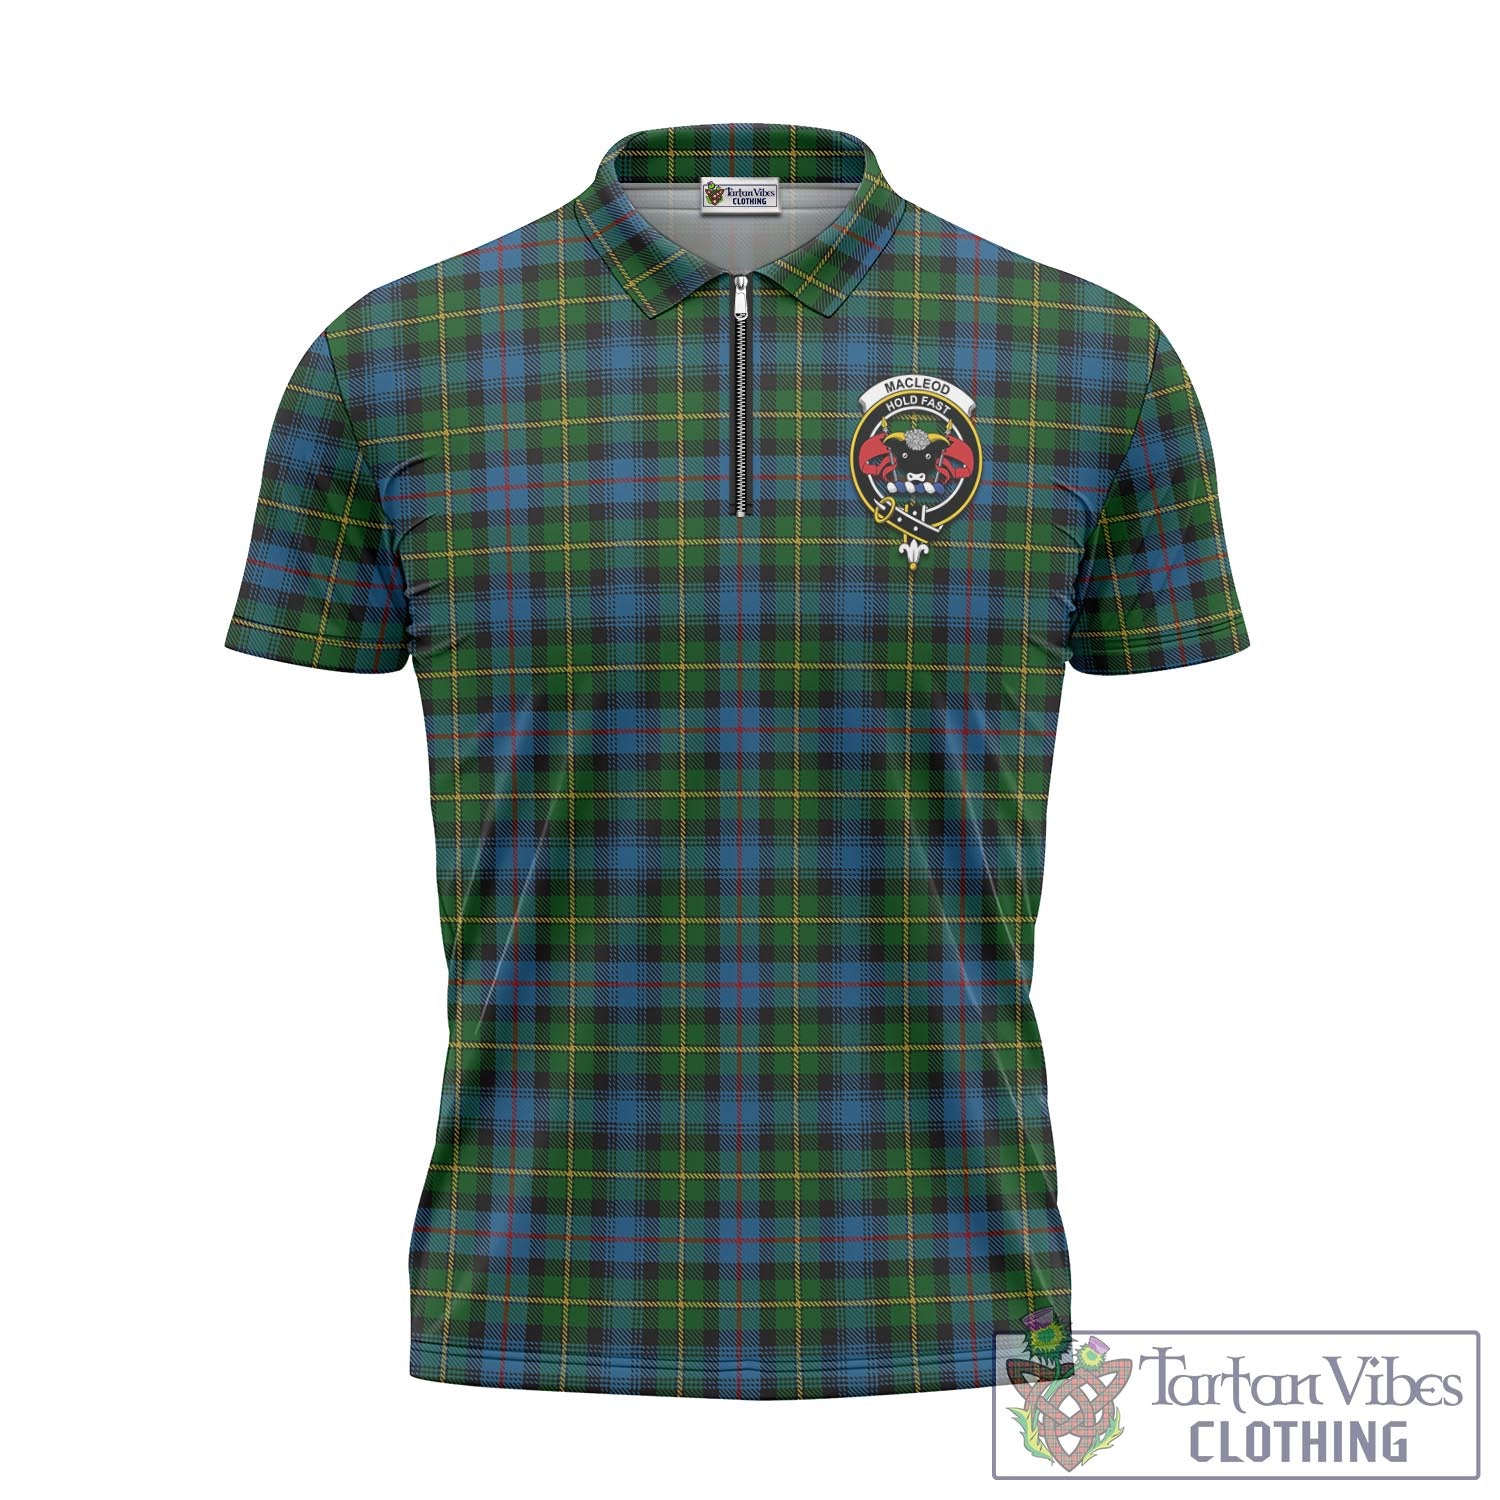 Tartan Vibes Clothing MacLeod of Skye Tartan Zipper Polo Shirt with Family Crest